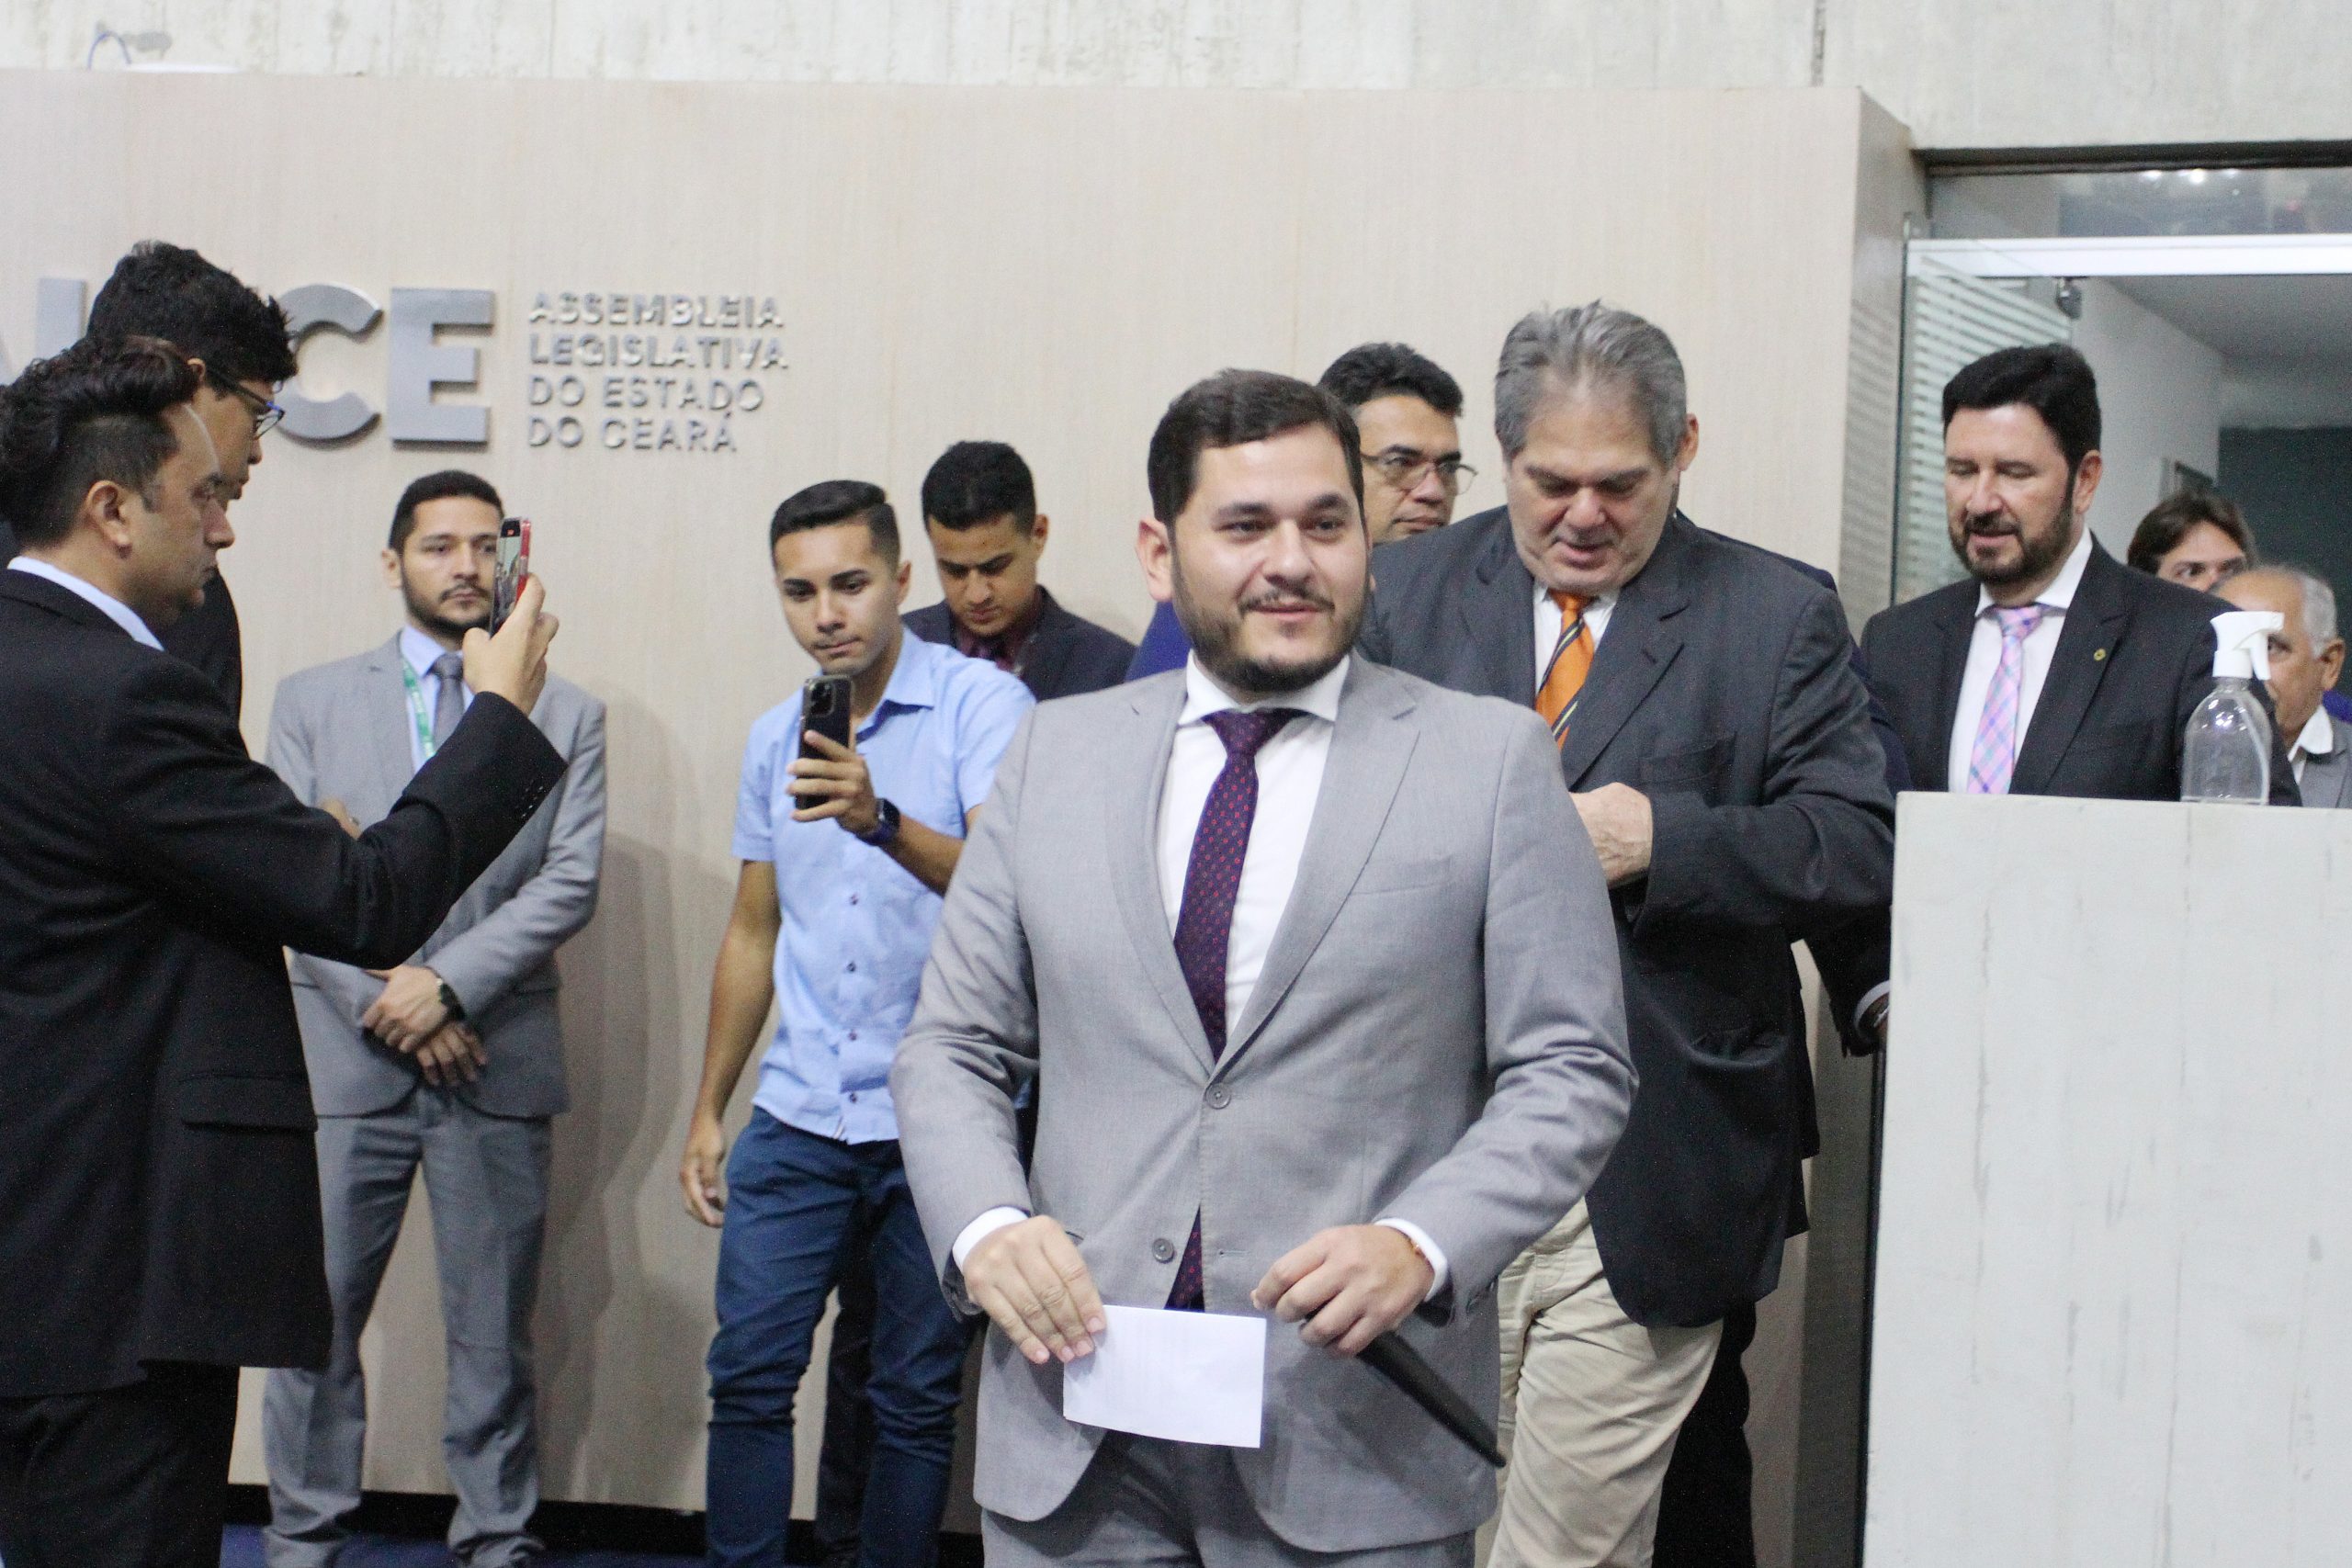 Audic Mota retorna à Assembleia Legislativa após licença de David de Raimundão